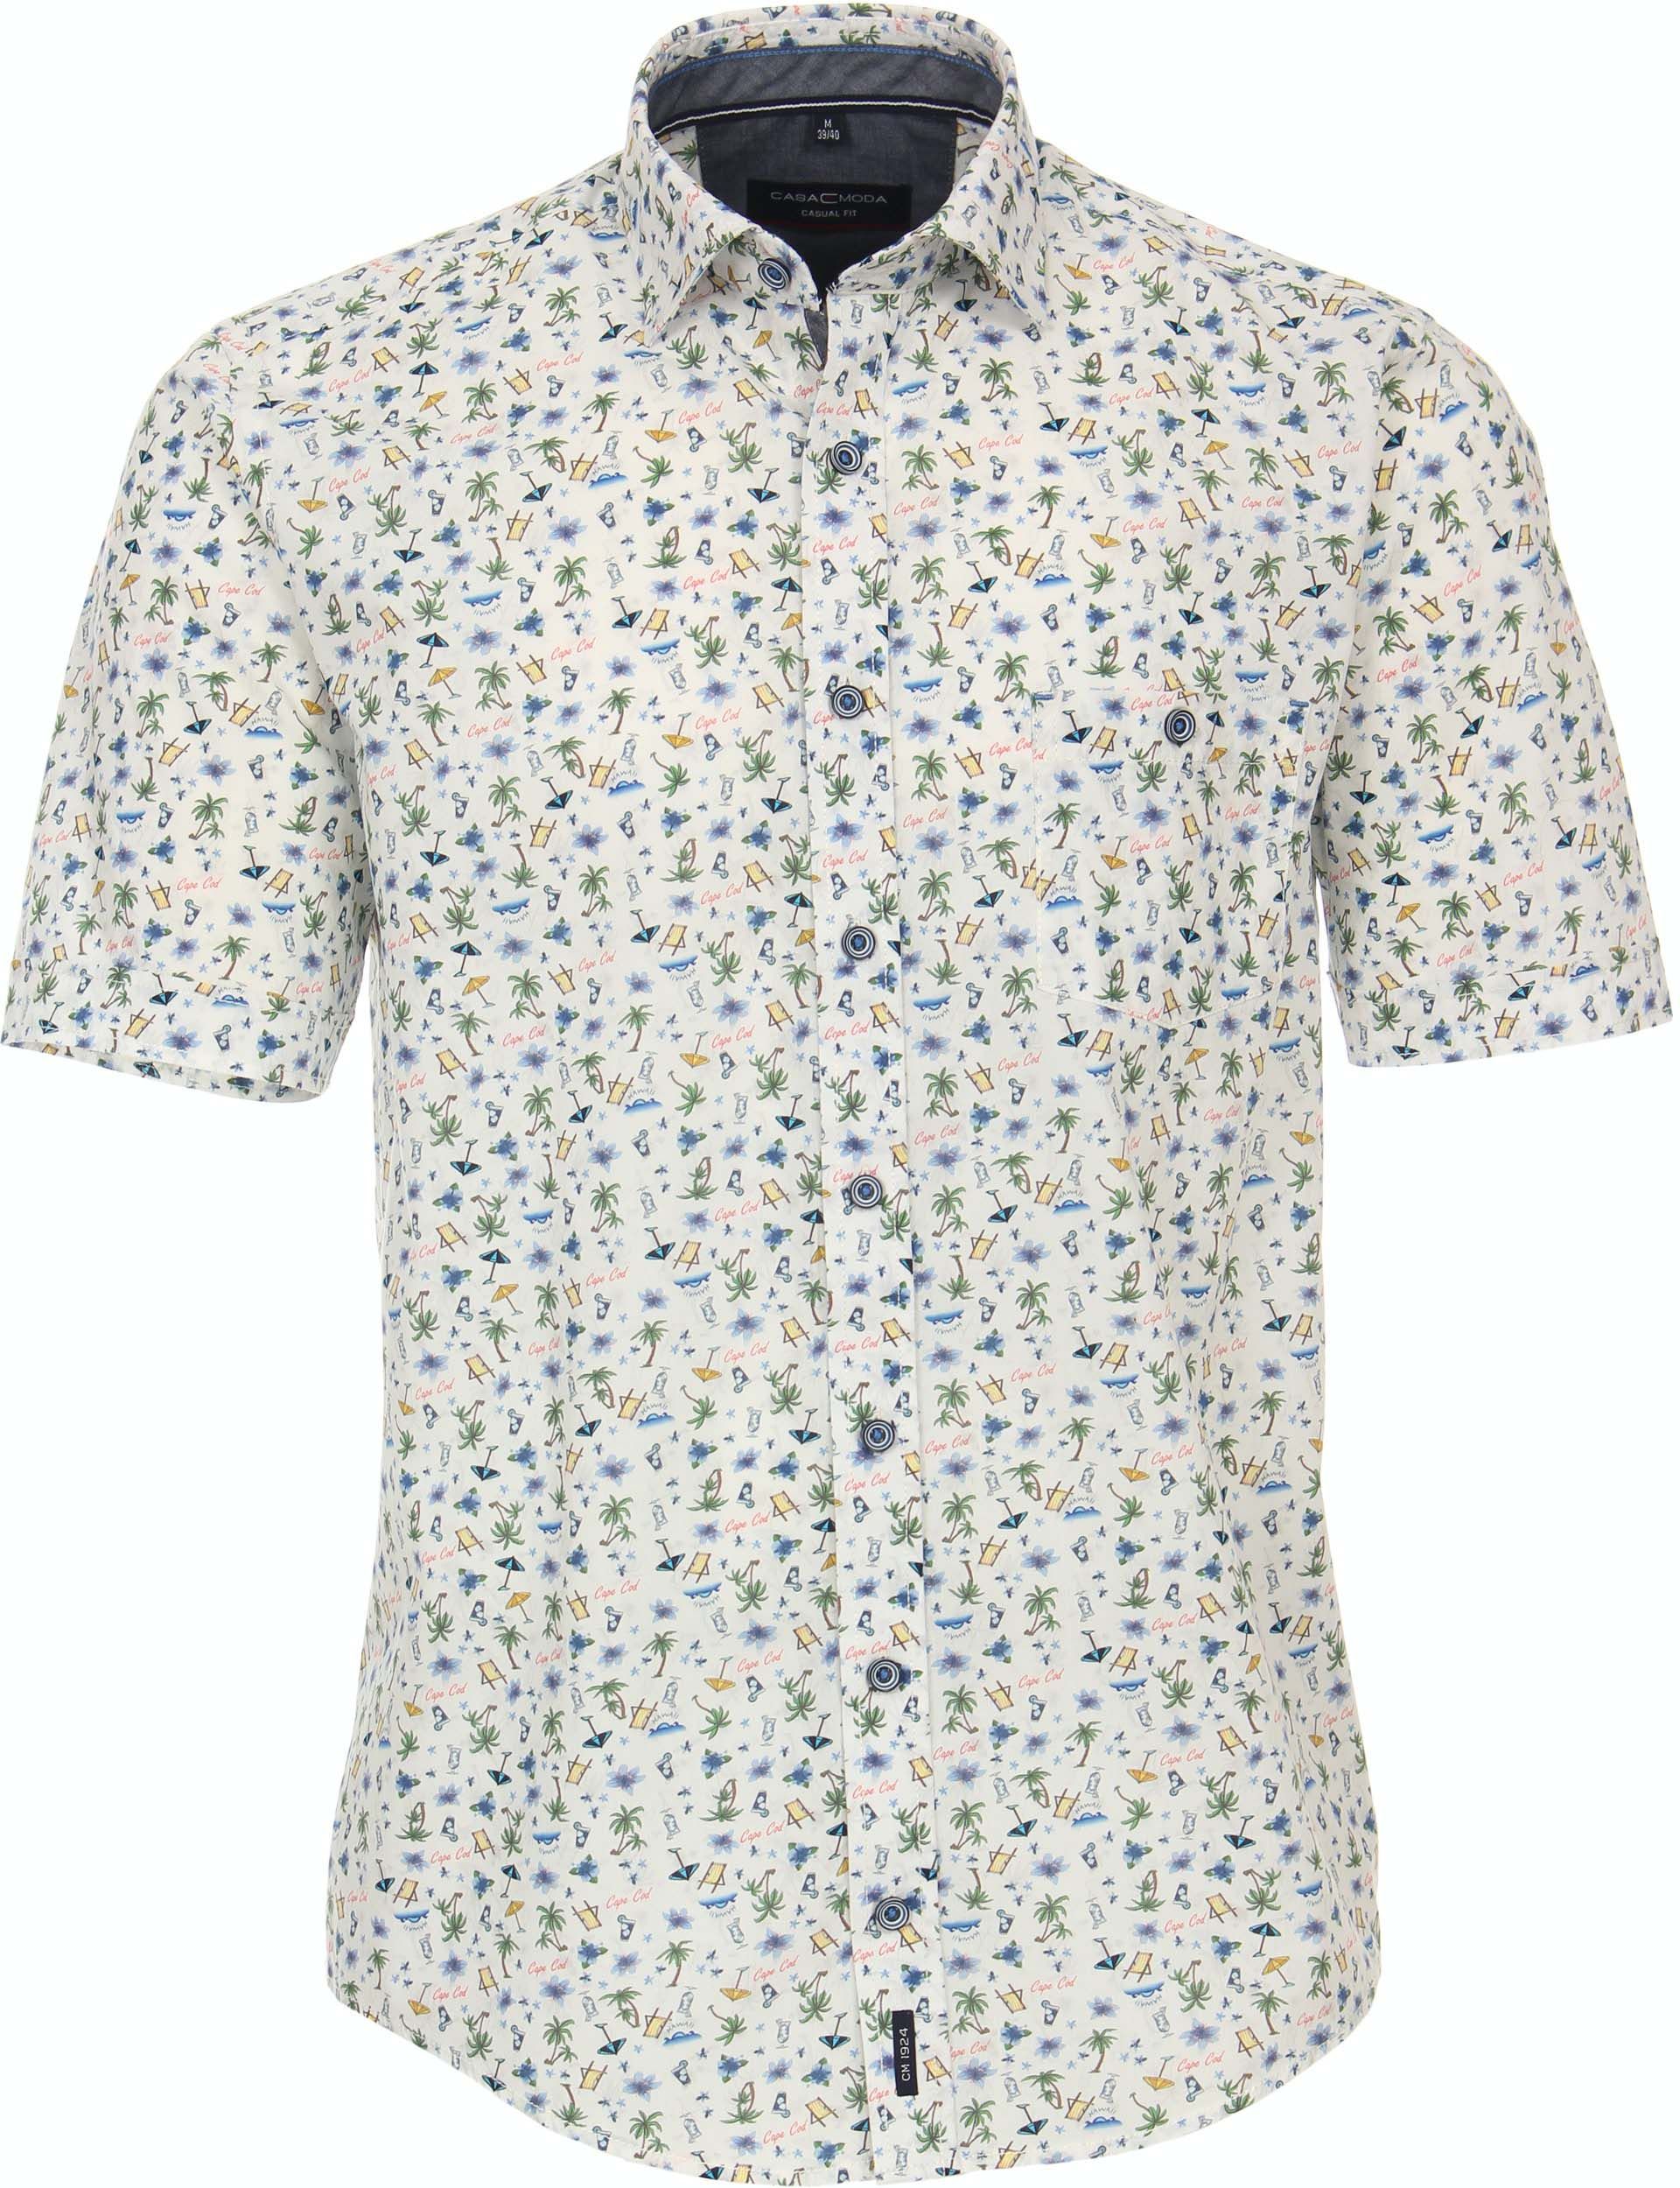 Casa Moda SS Shirt Summer Print White Multicolour size L